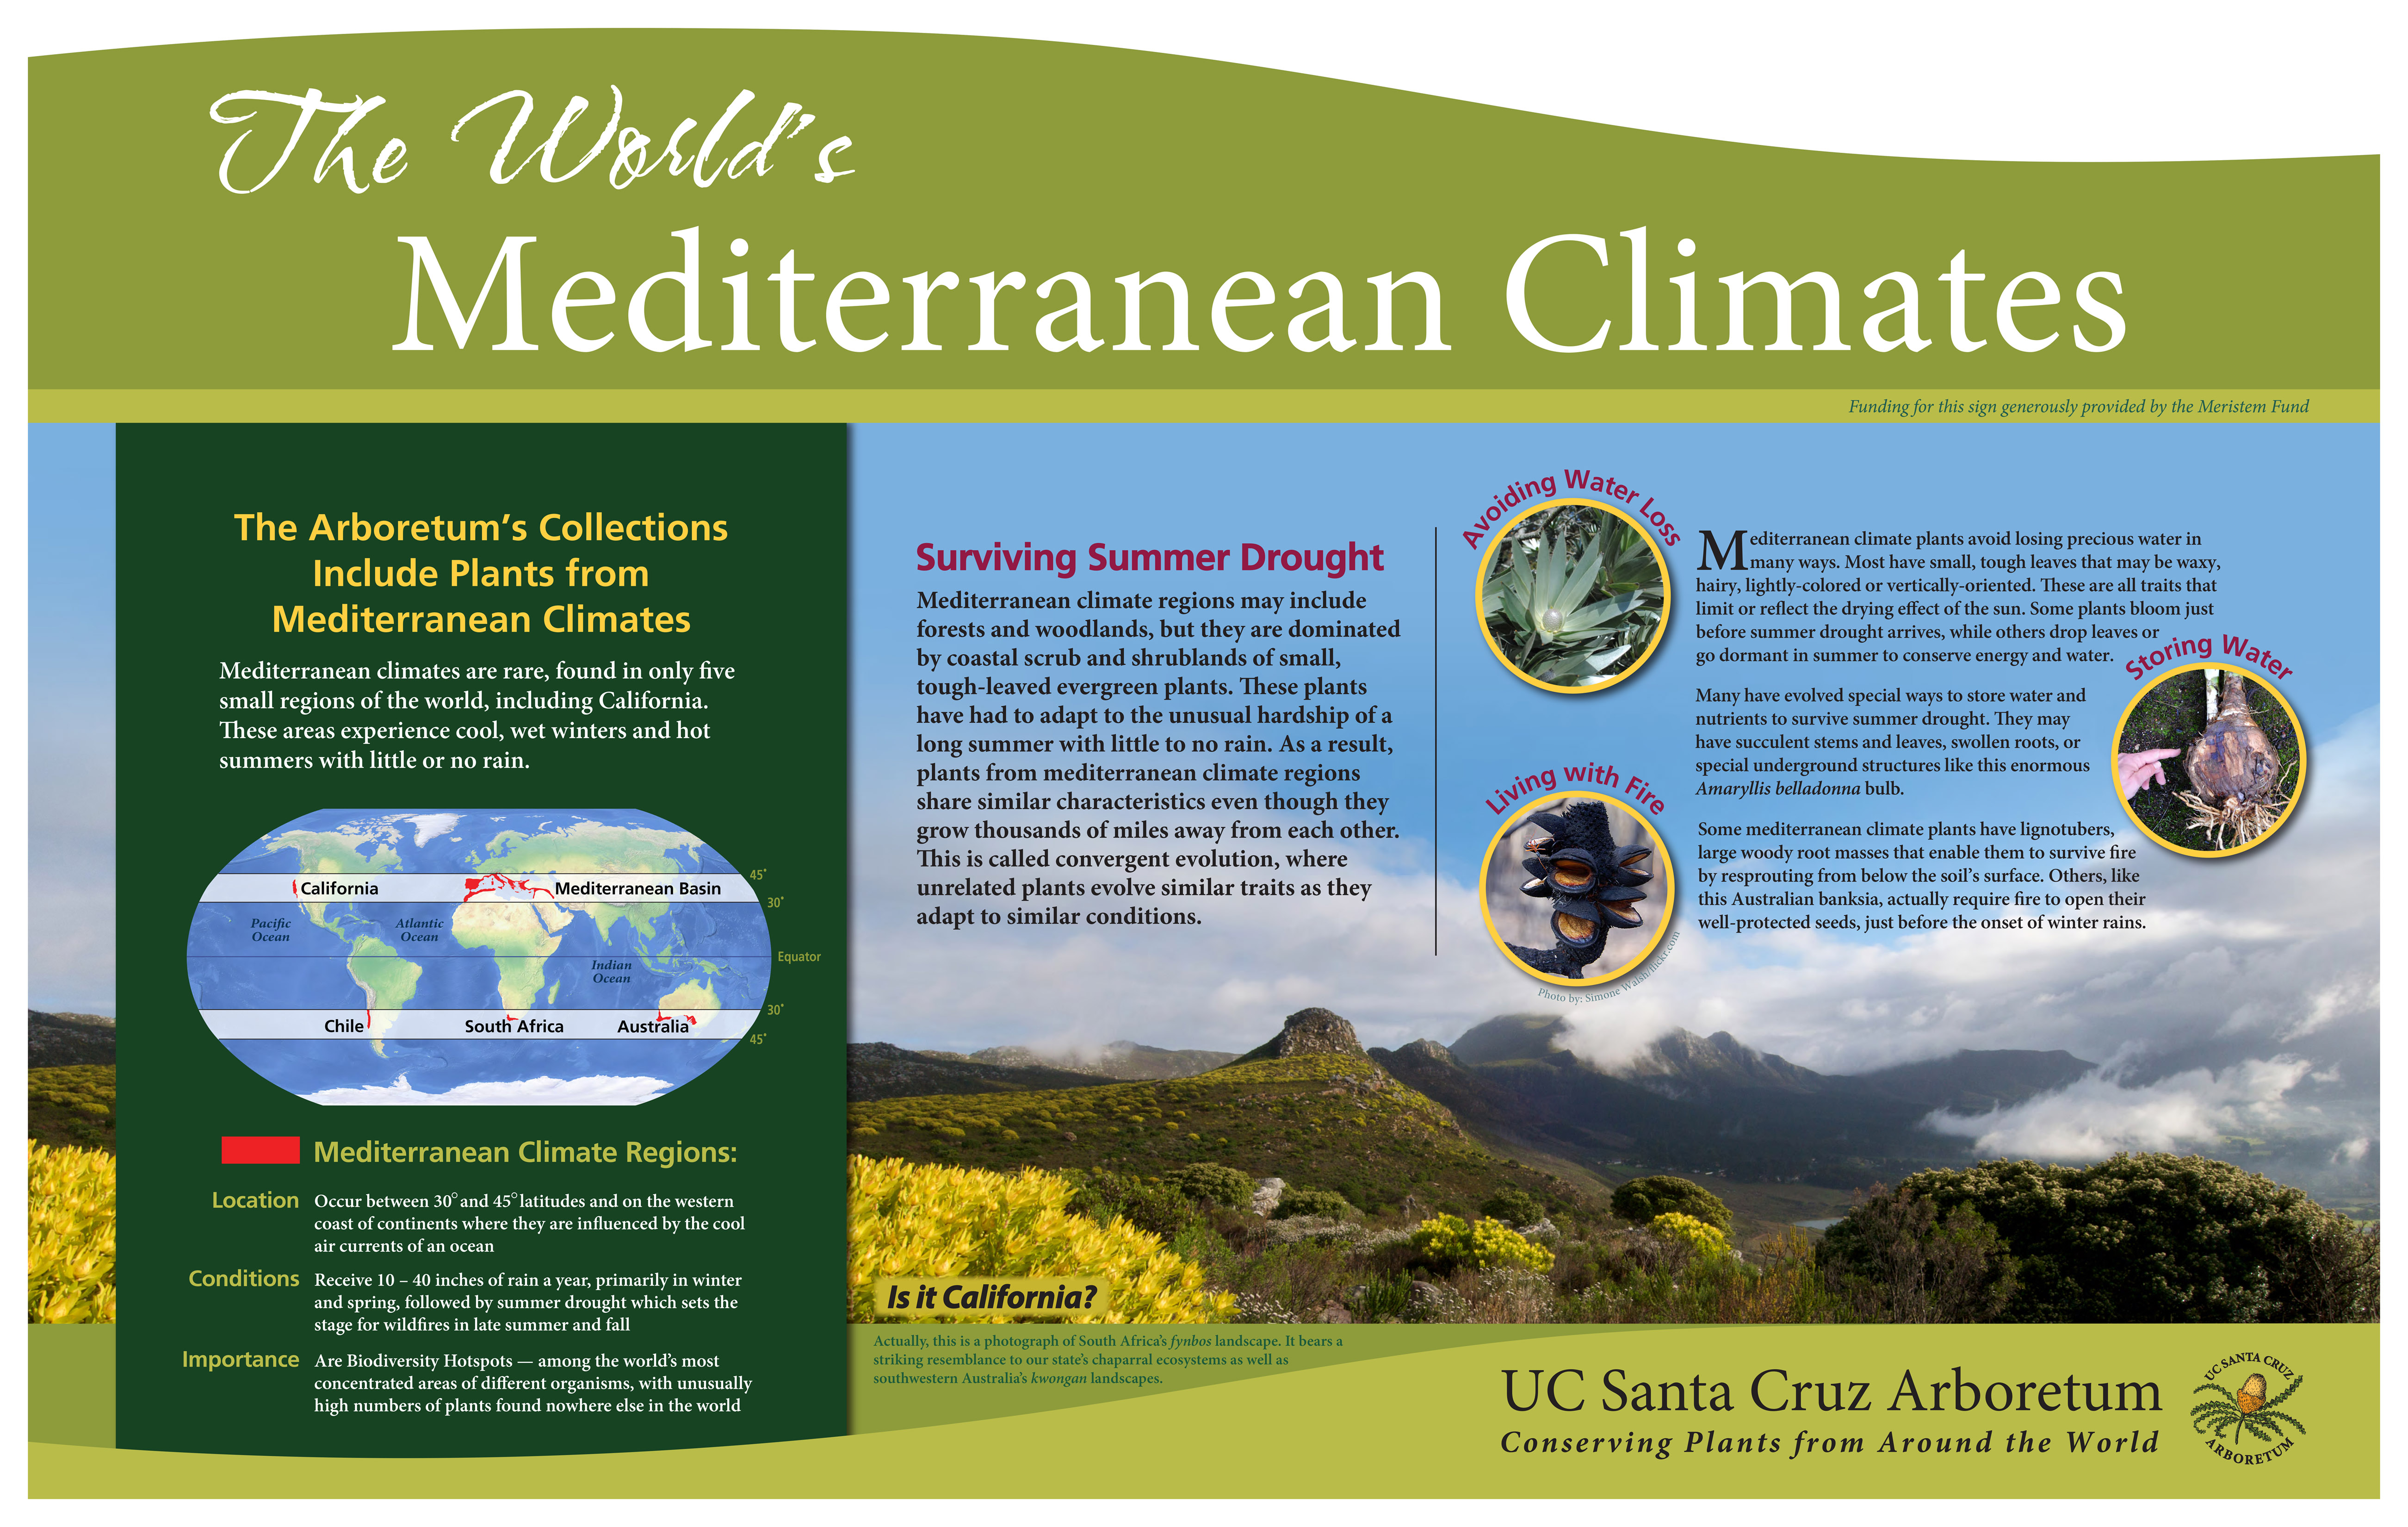 4-ucsc-arboretum_mediterranean-climate-regions-of-the-world-sign.jpg